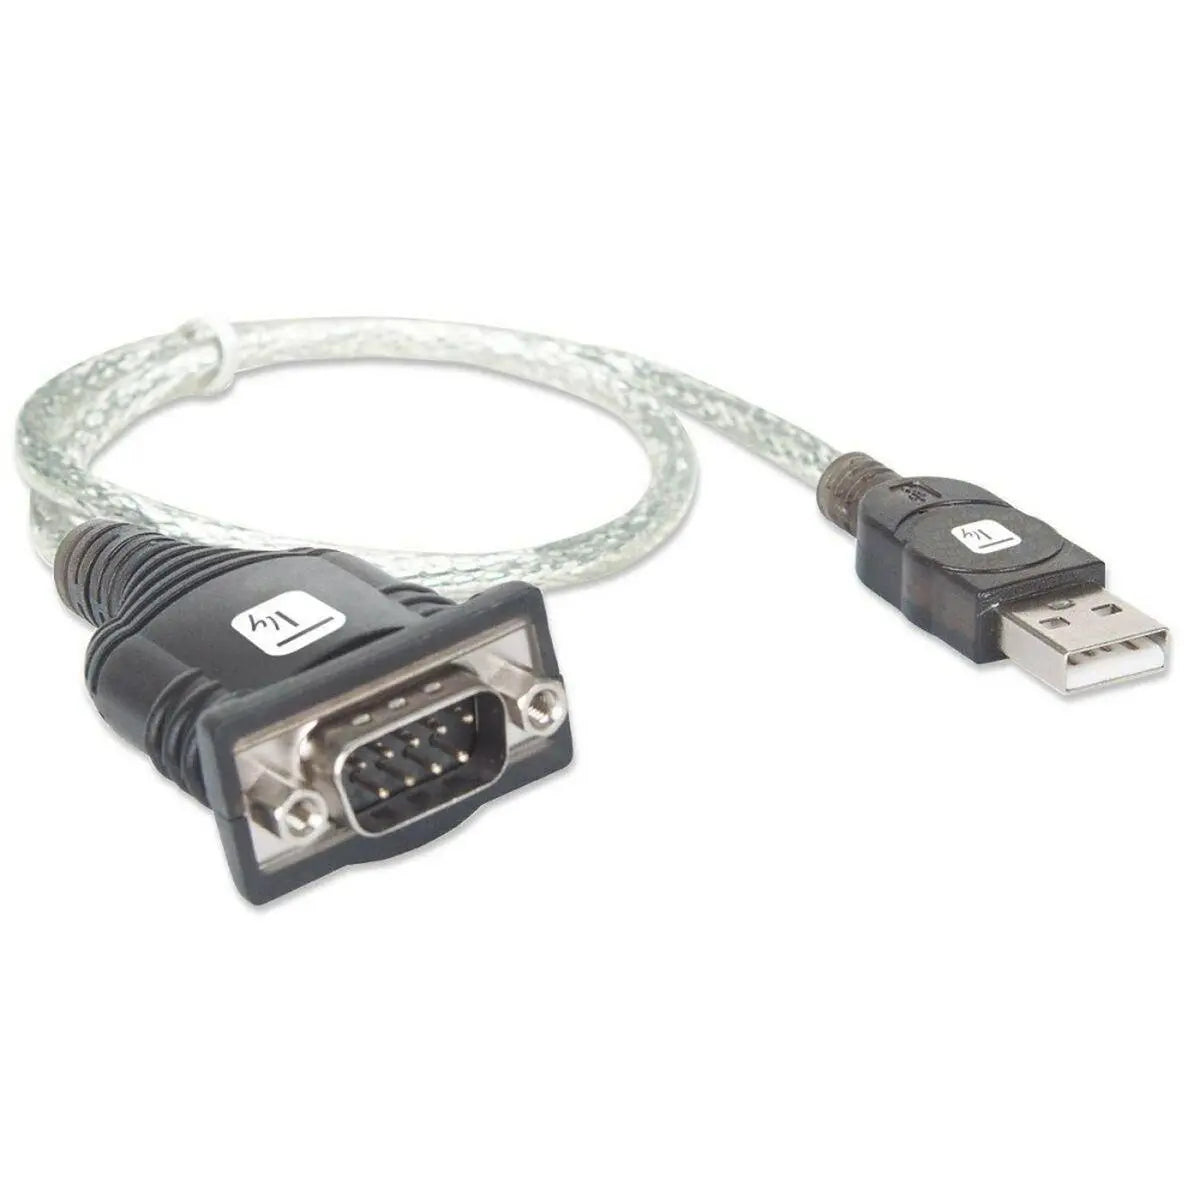 USB to Serial Port Adapter Techly IDATA USB-SER-2T 45 cm - IGSI Europe Ltd